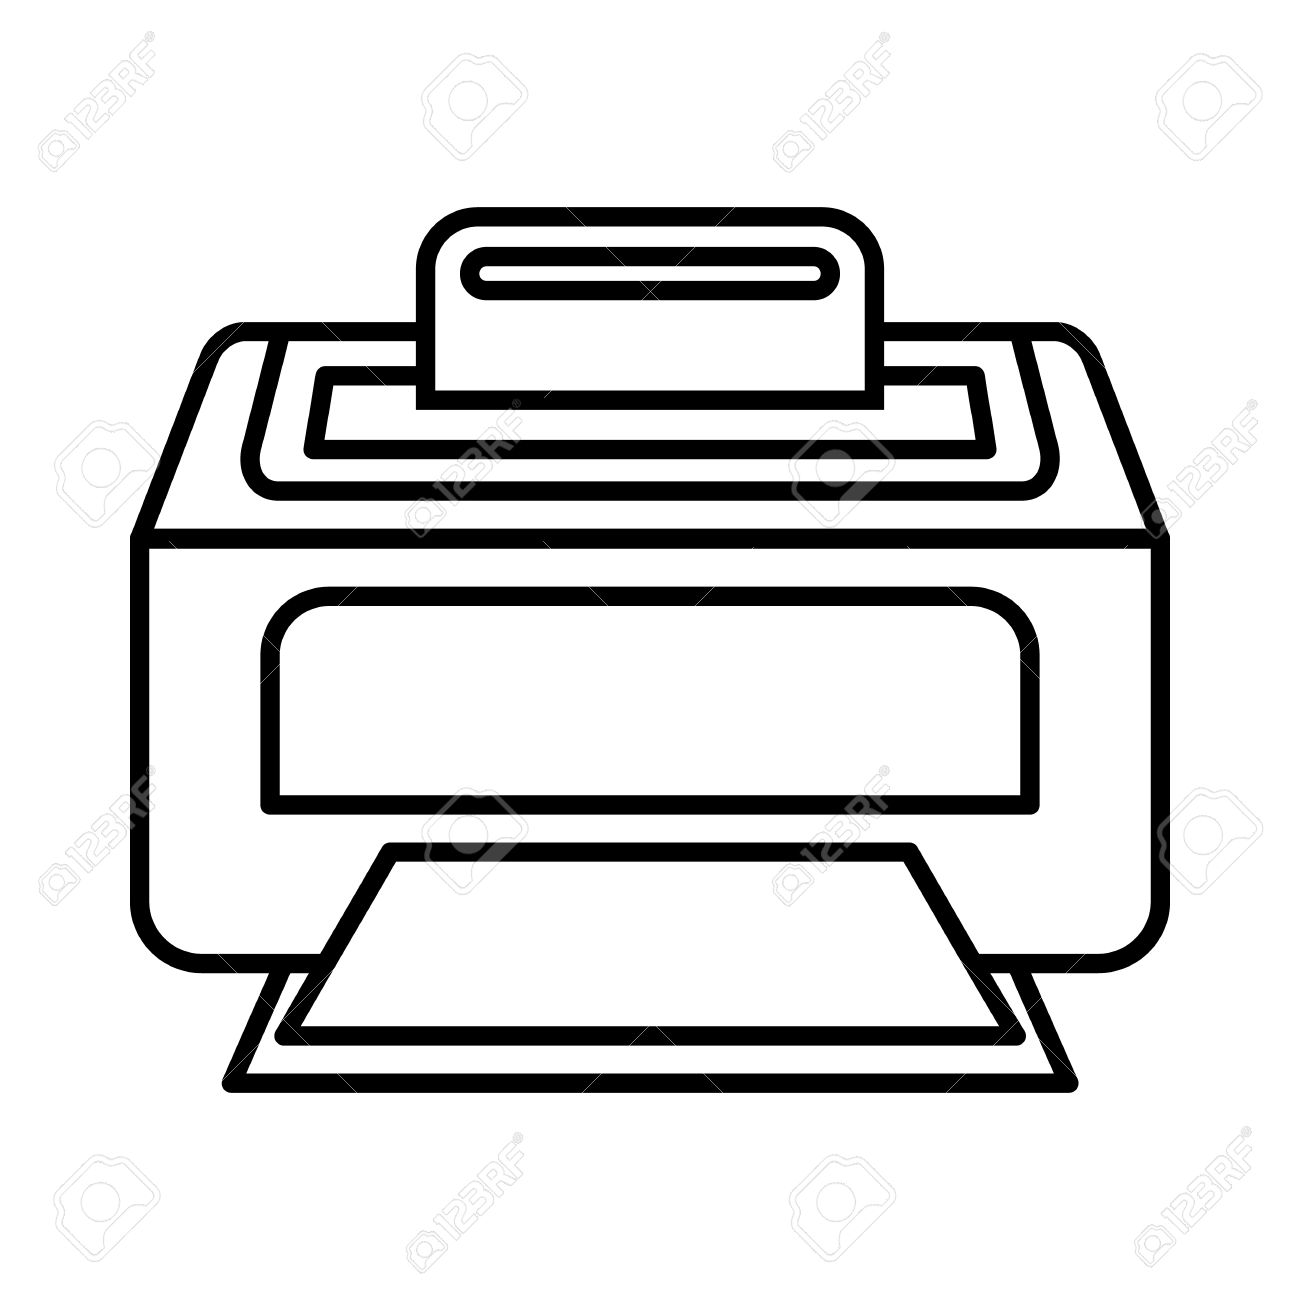 Modern laser printer icon, outline style